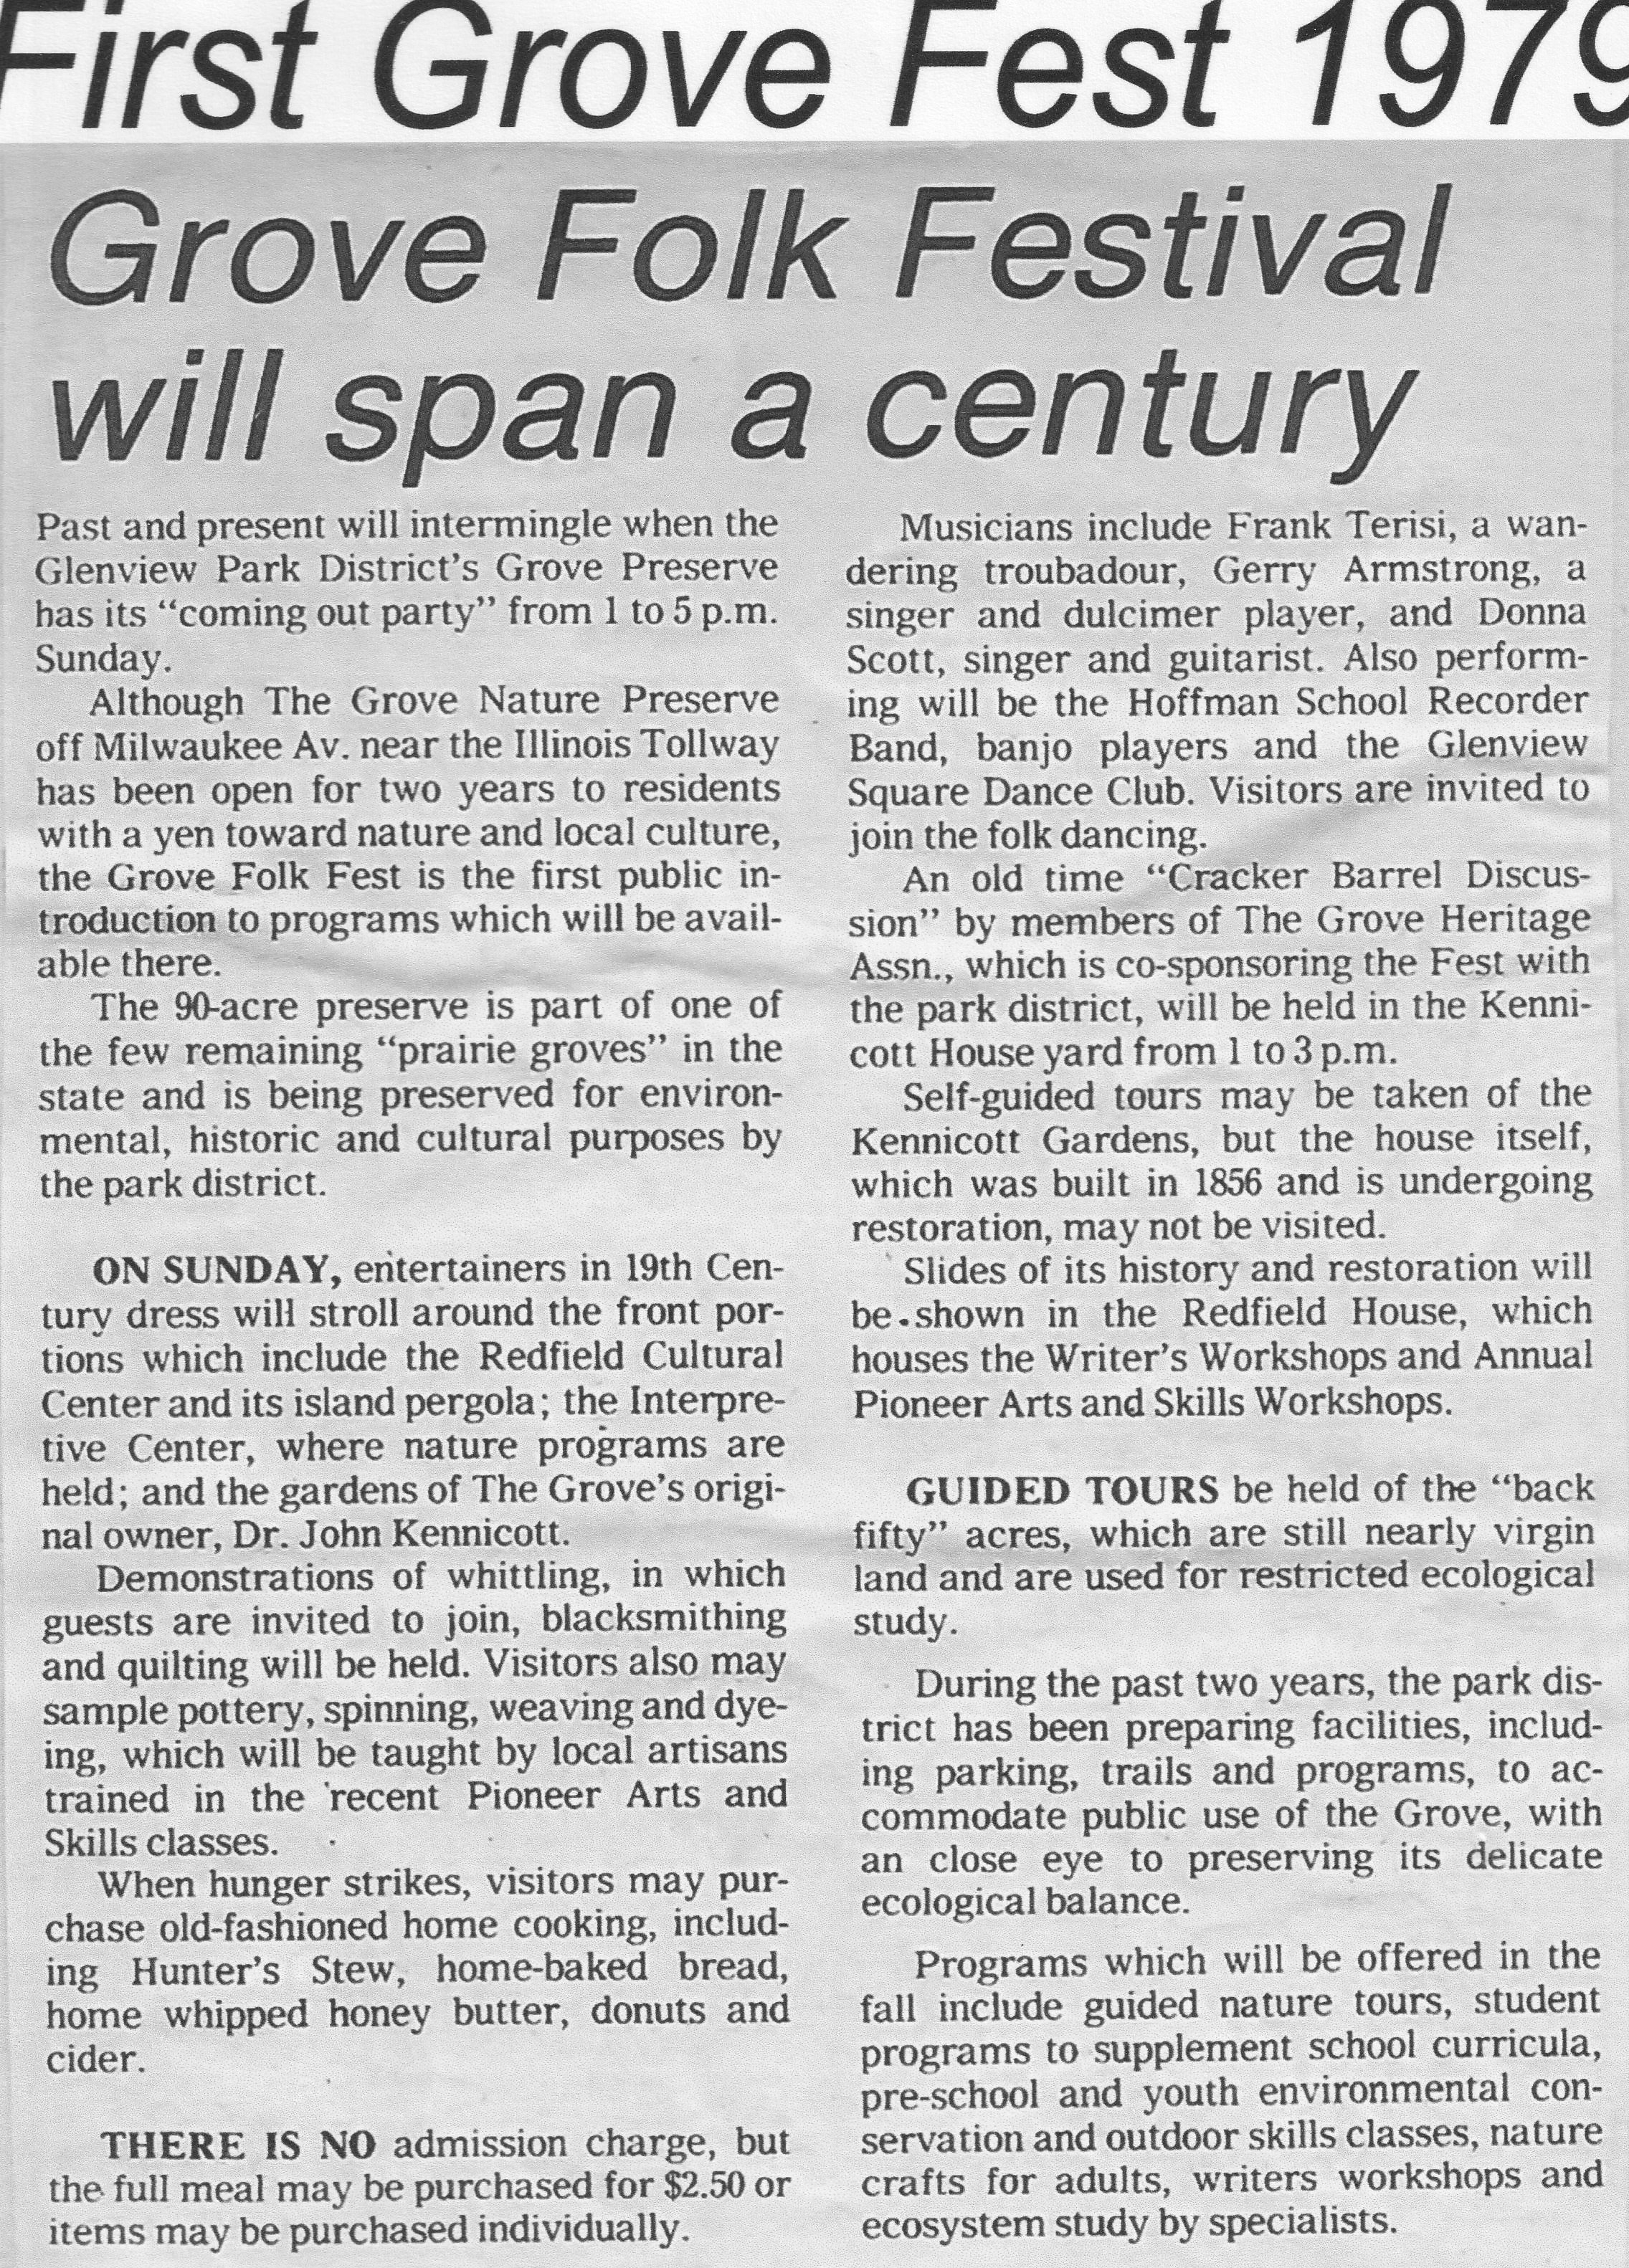 Newspaper Article - 1979 Grove Fest